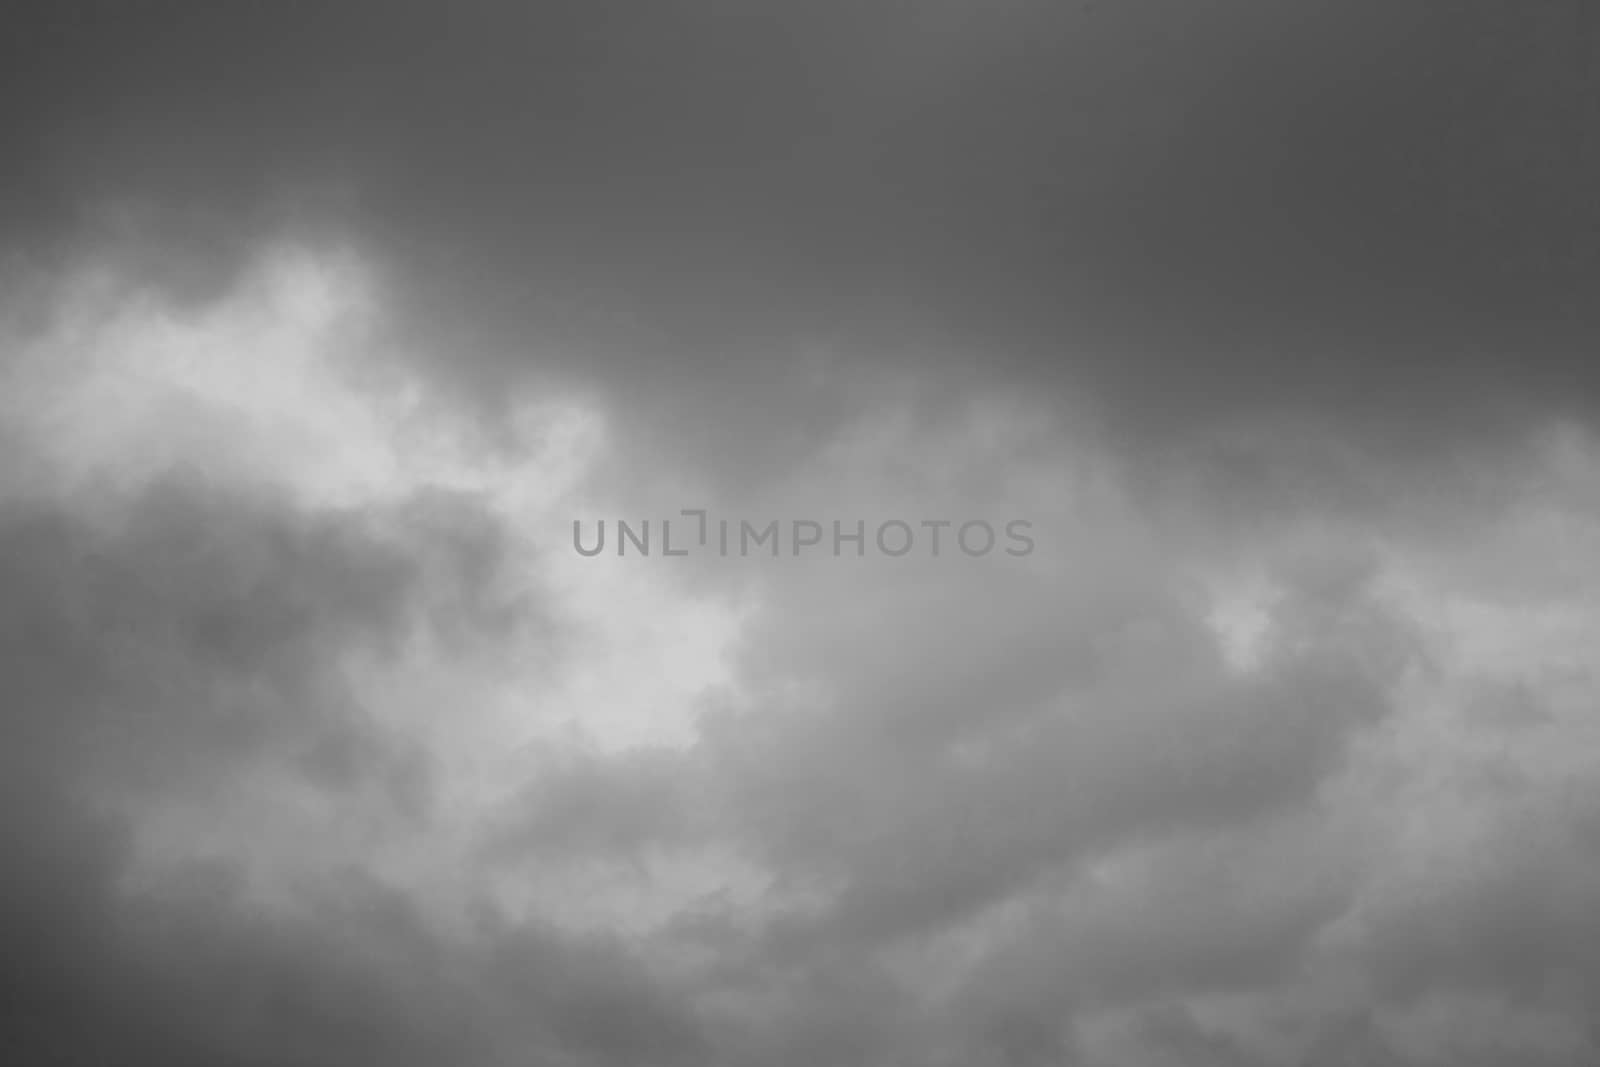 Cloudscape background of overcast cumulus clouds black & white monochrome image